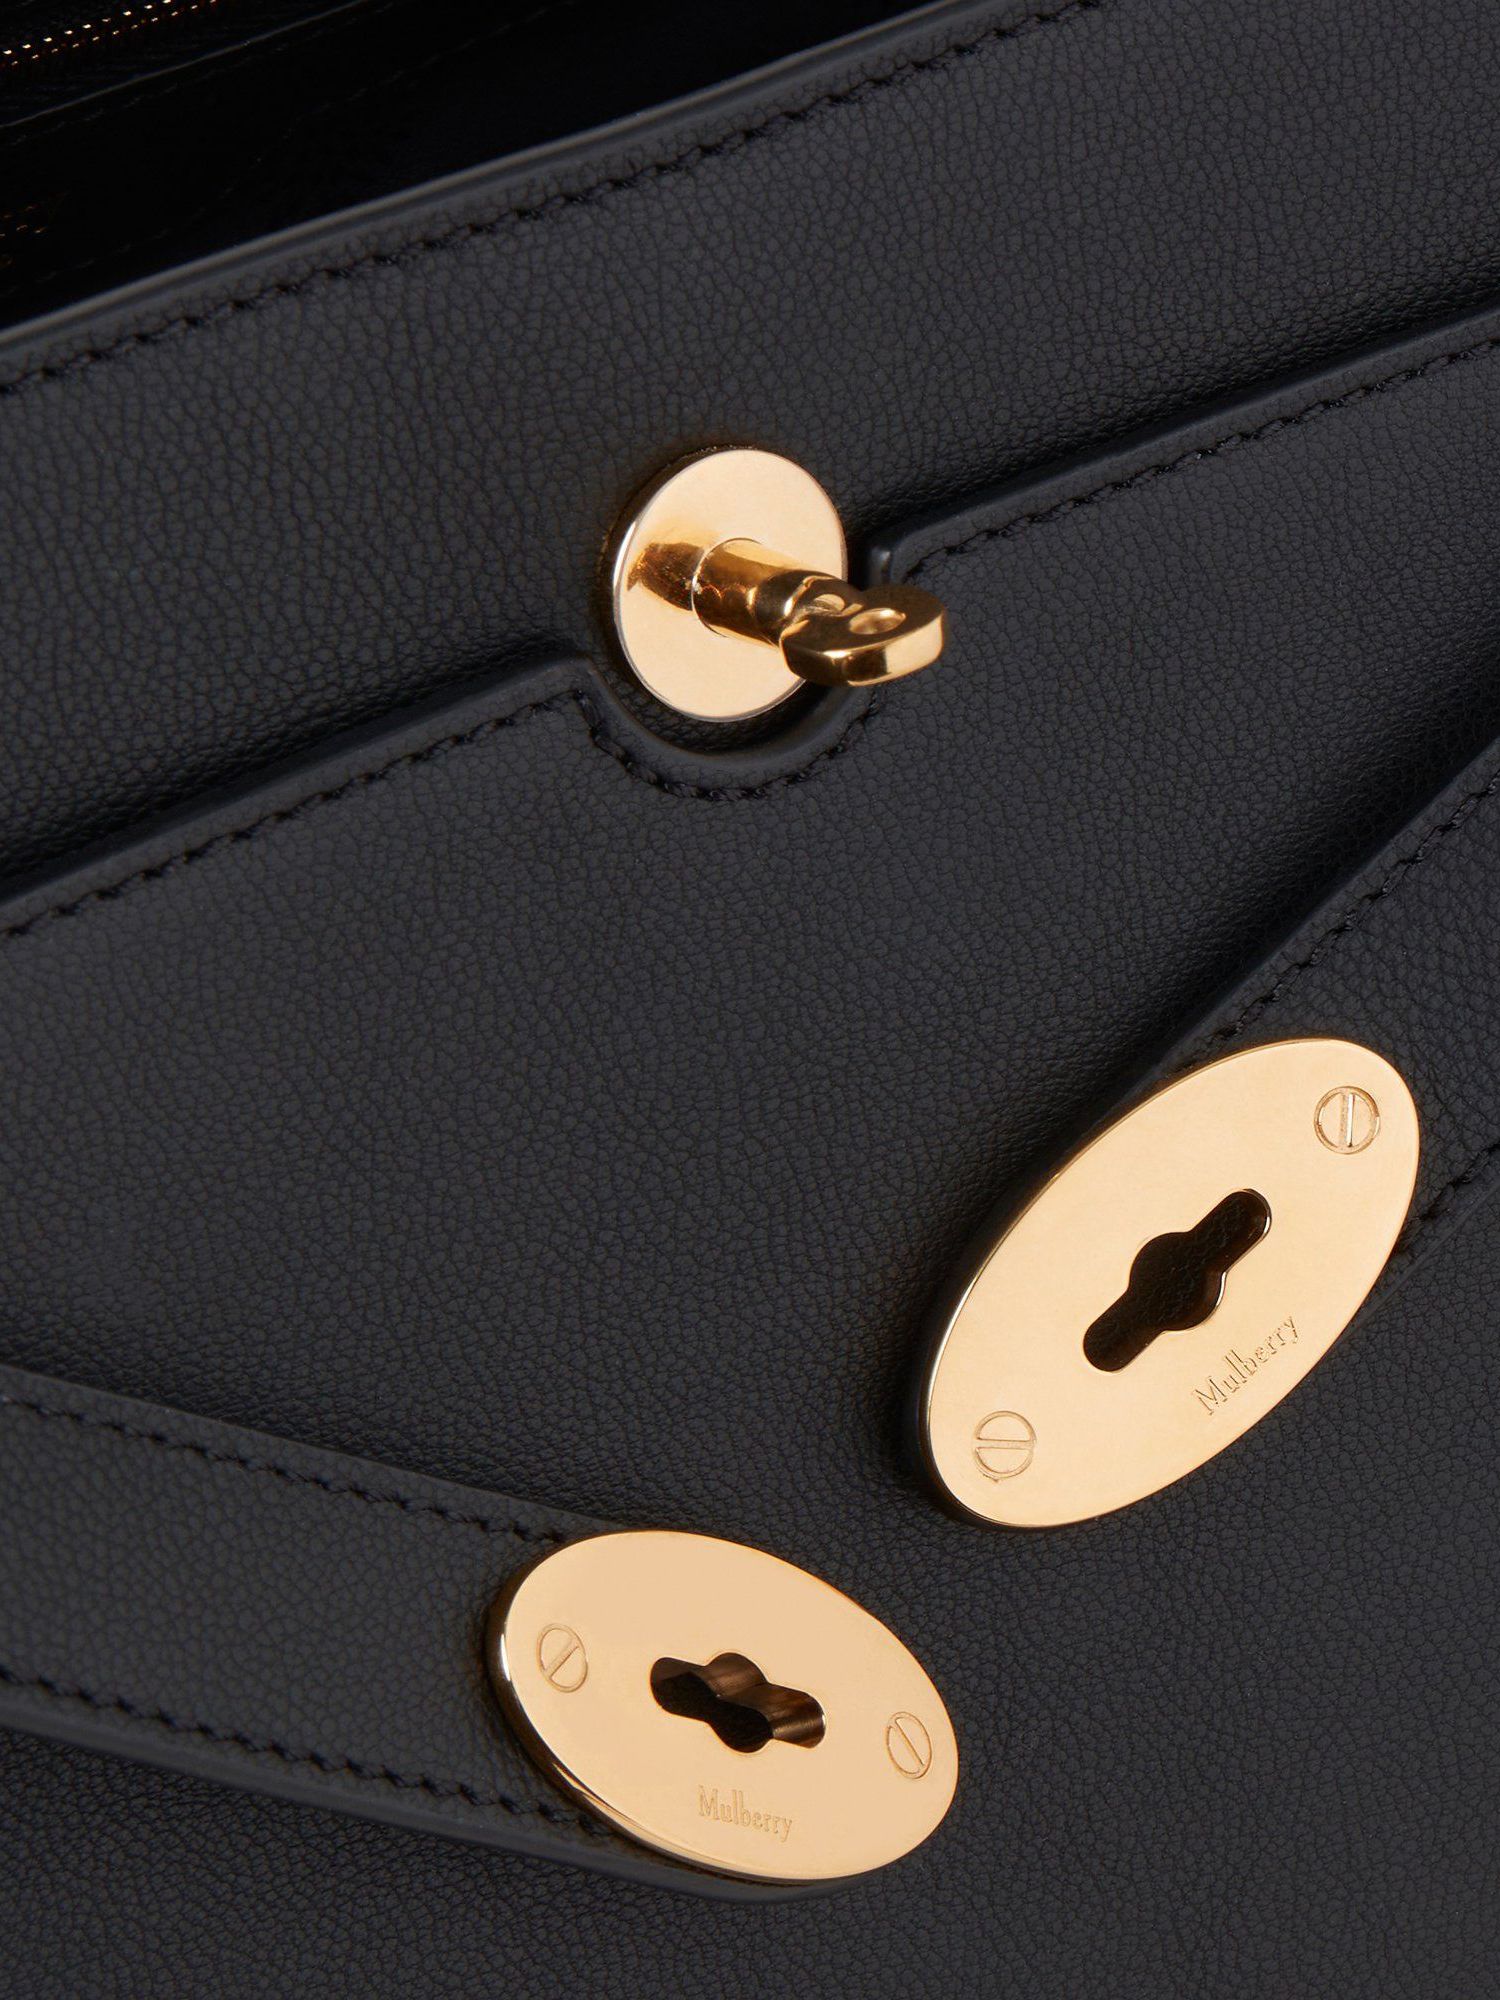 Mulberry Islington Silky Calf Handbag, Black at John Lewis & Partners